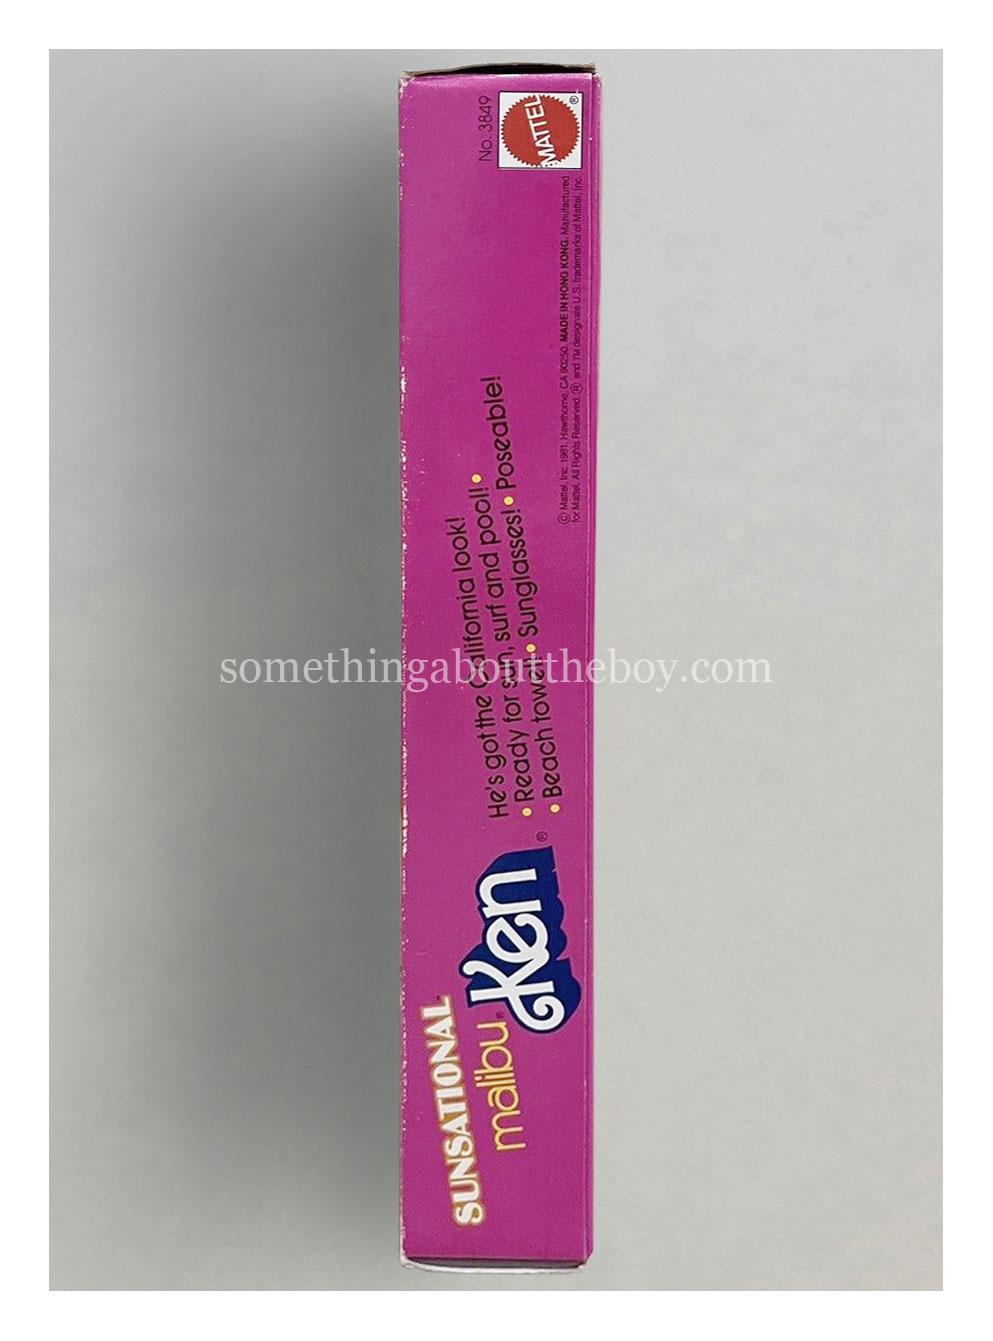 1982 #3849 Sunsational Malibu Ken variation packaging